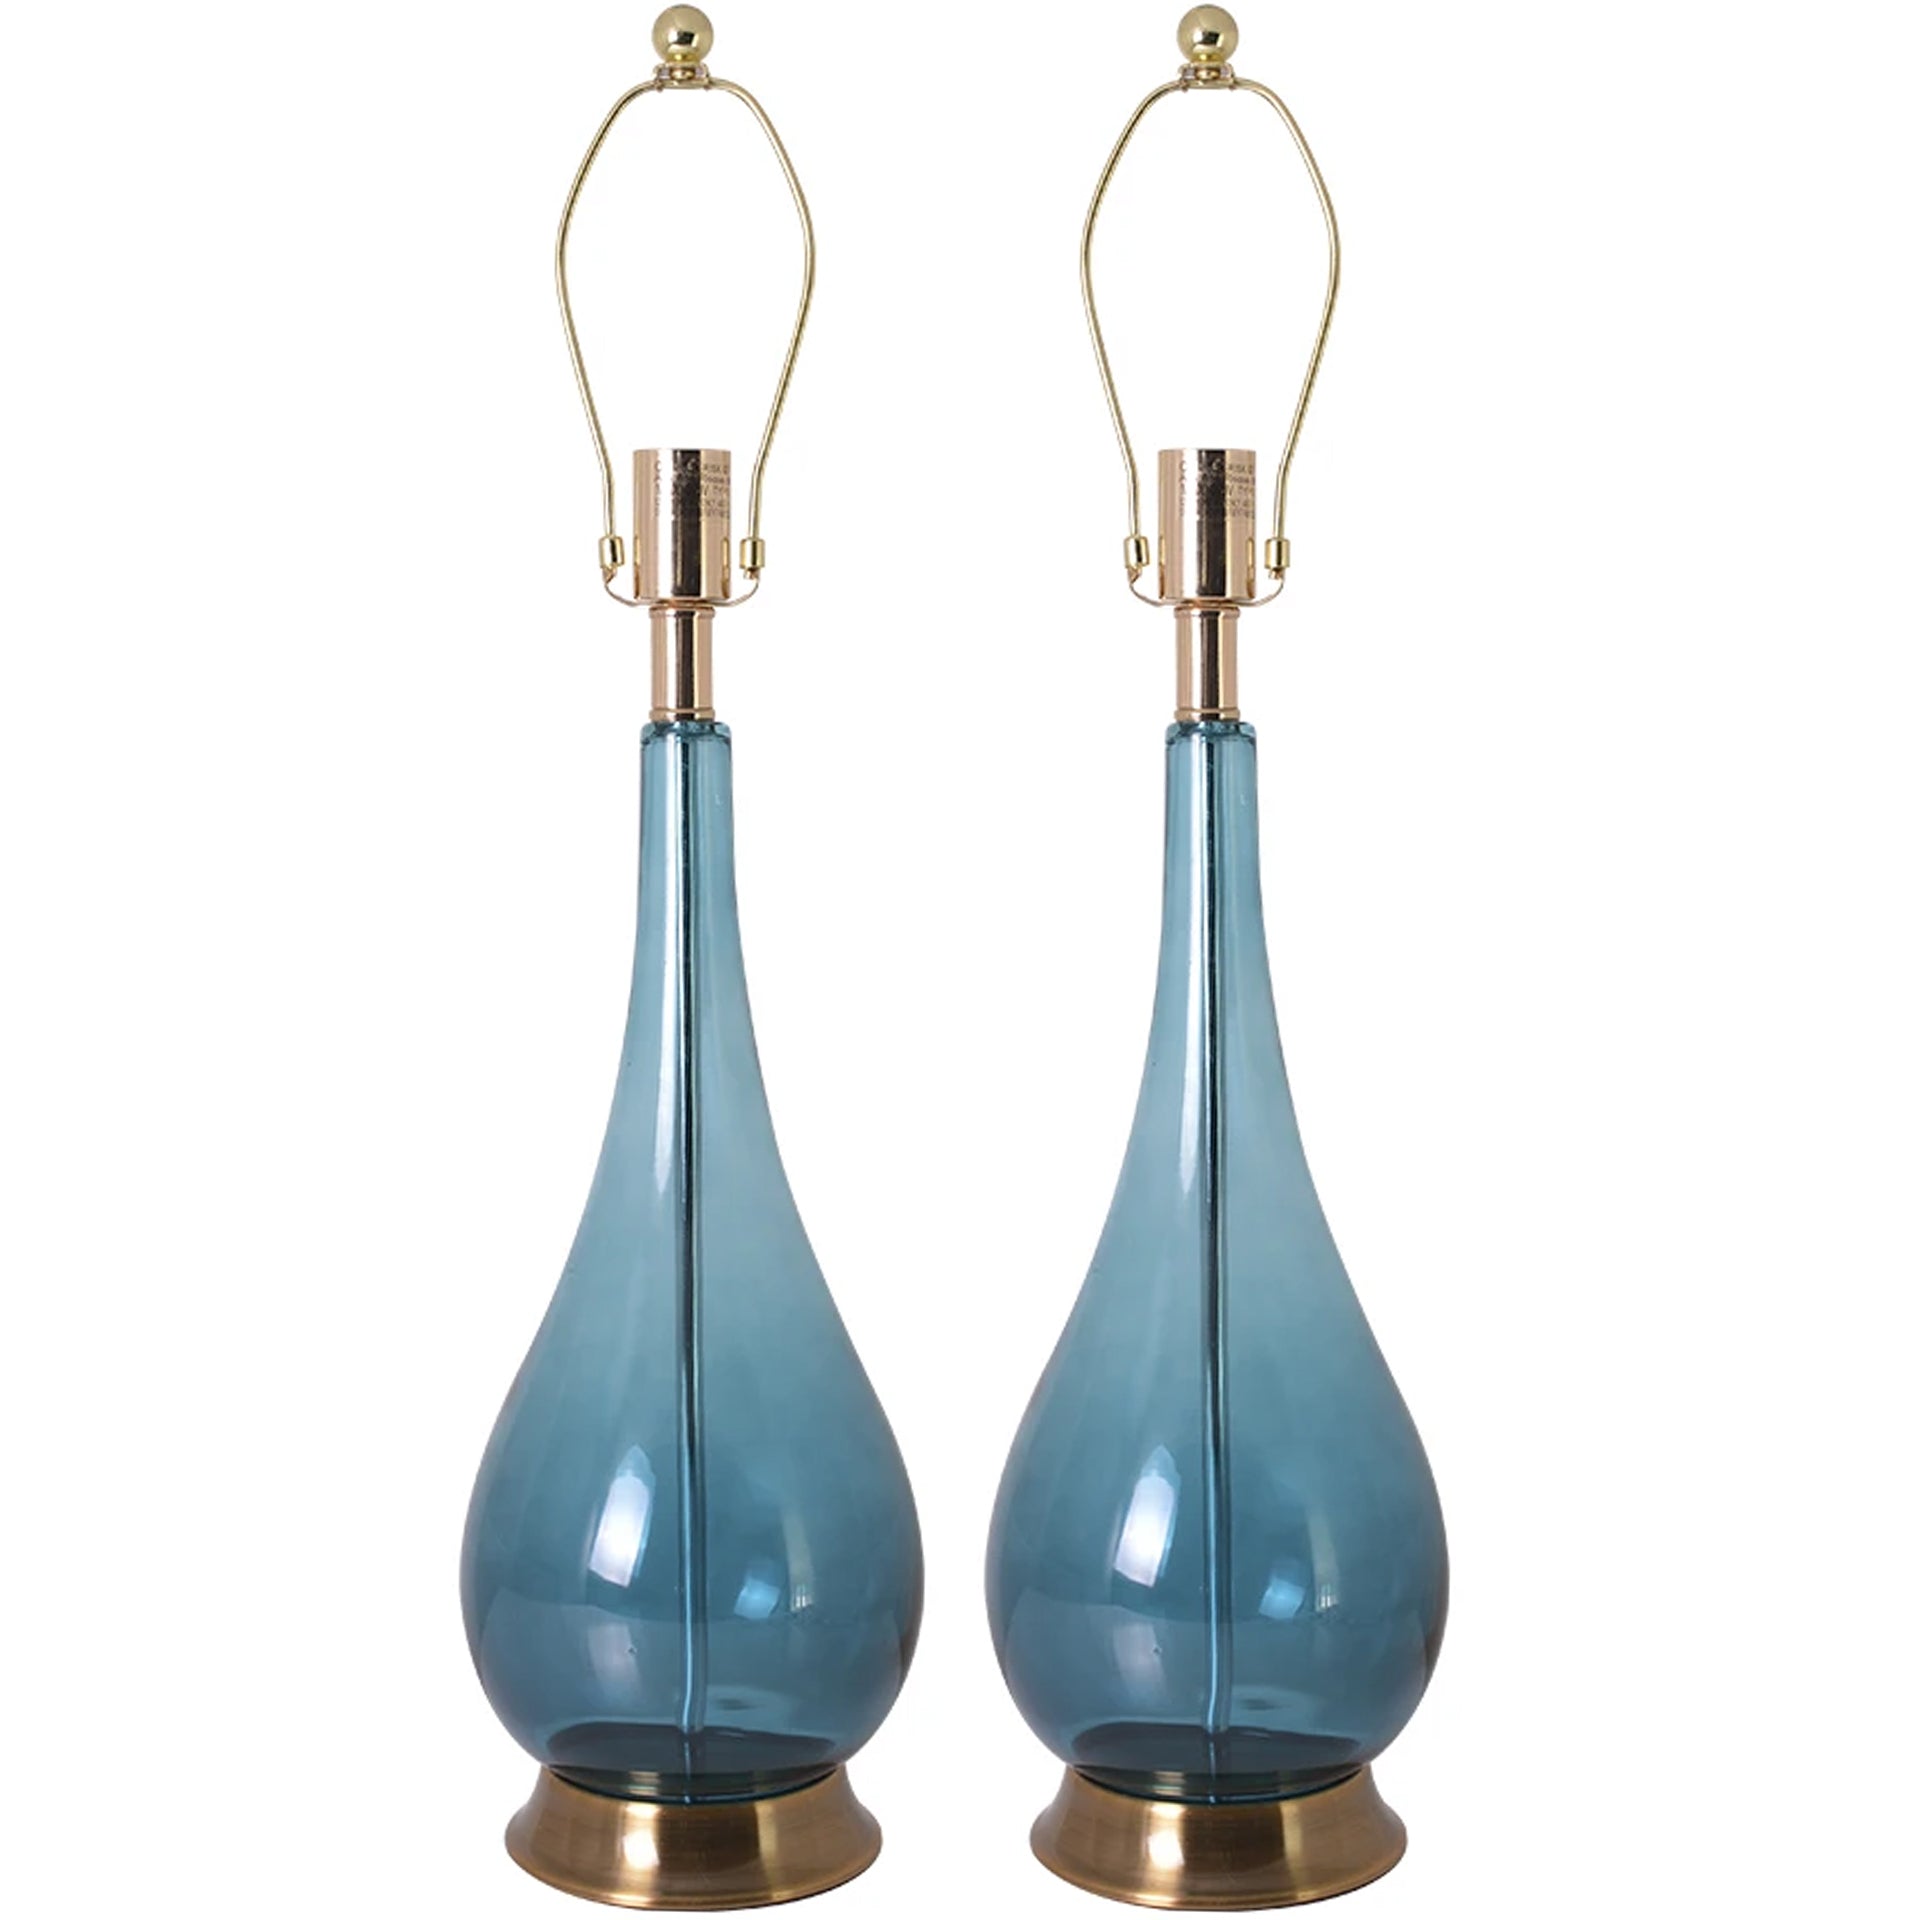 Carro Home Tulip Big Translucent Ombre Glass Table Lamp 30&quot; - Blue Ombre/Blue (Set of 2)